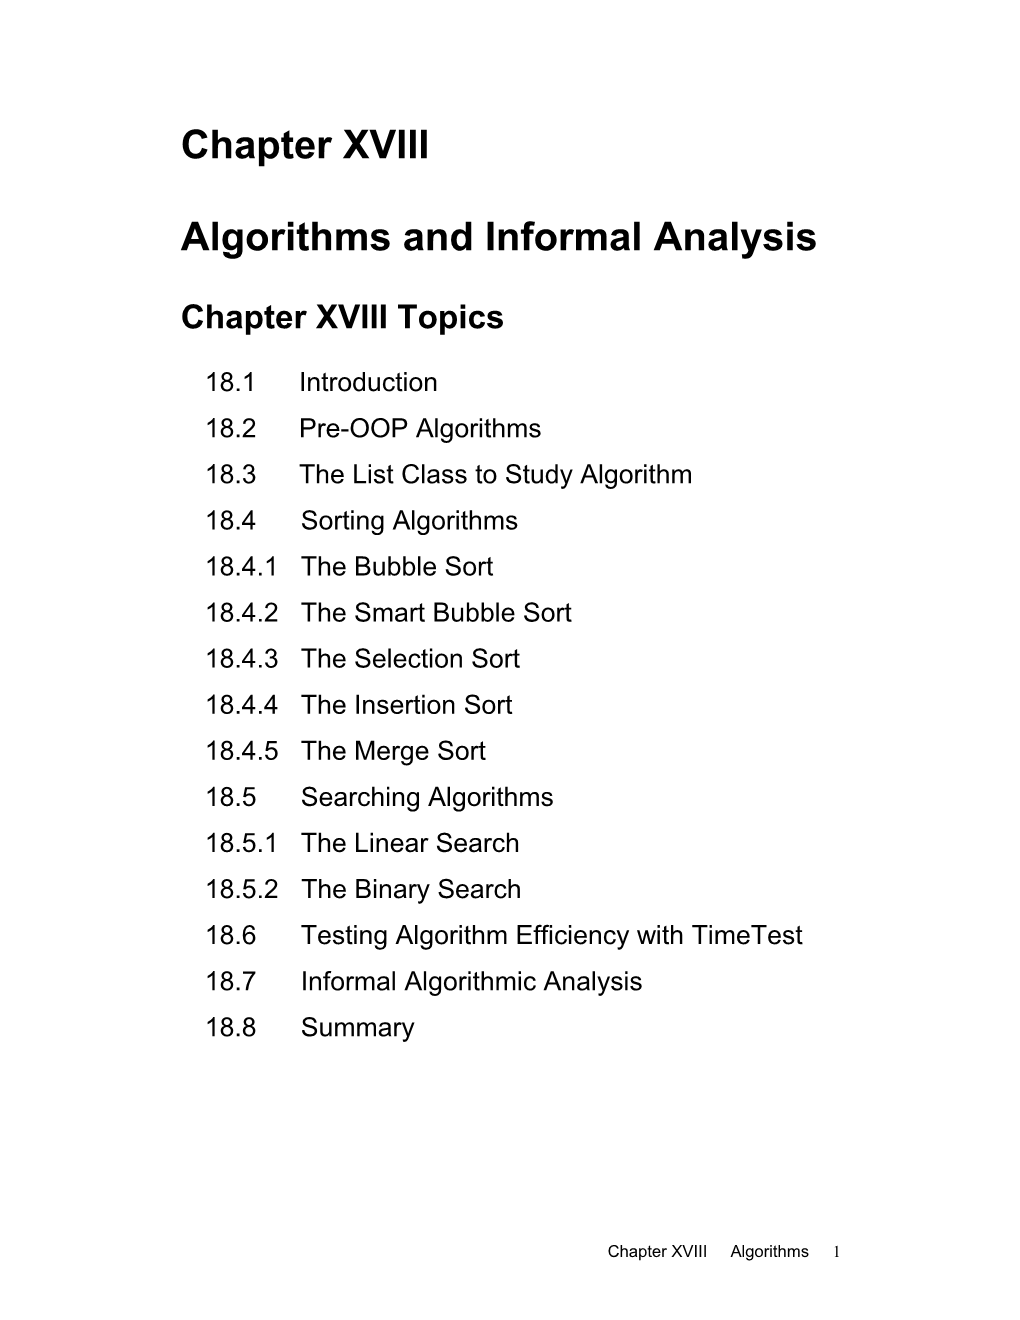 Algorithms and Informal Analysis